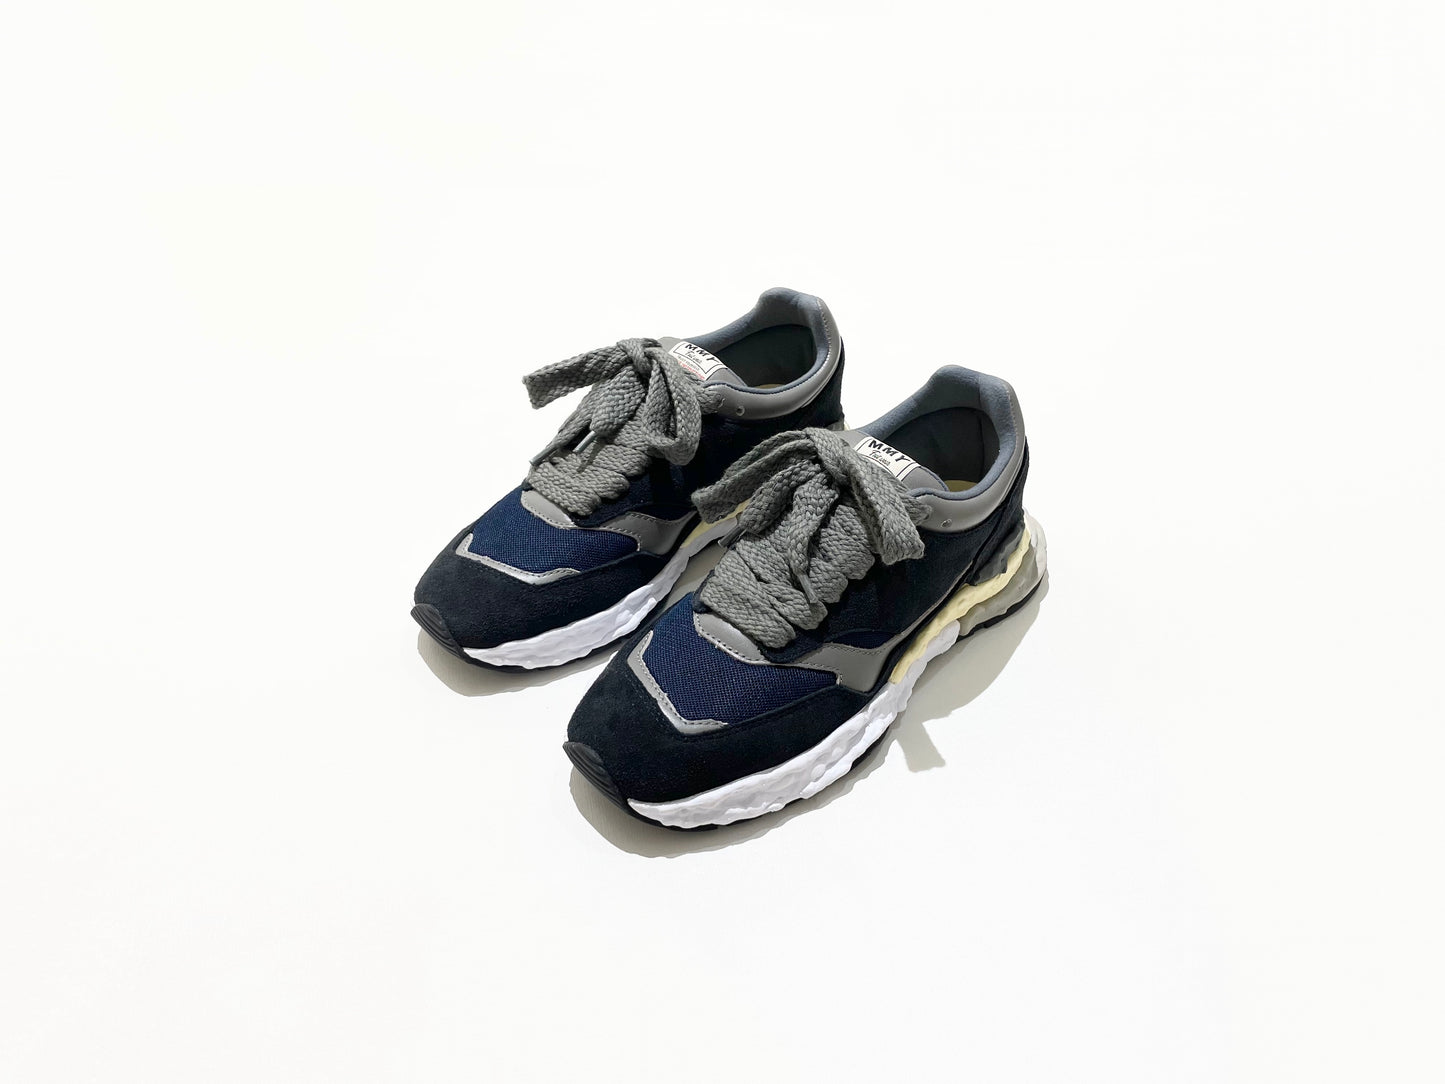 Maison Mihara Yasuhiro Mix Material OG Sole Sneaker - George